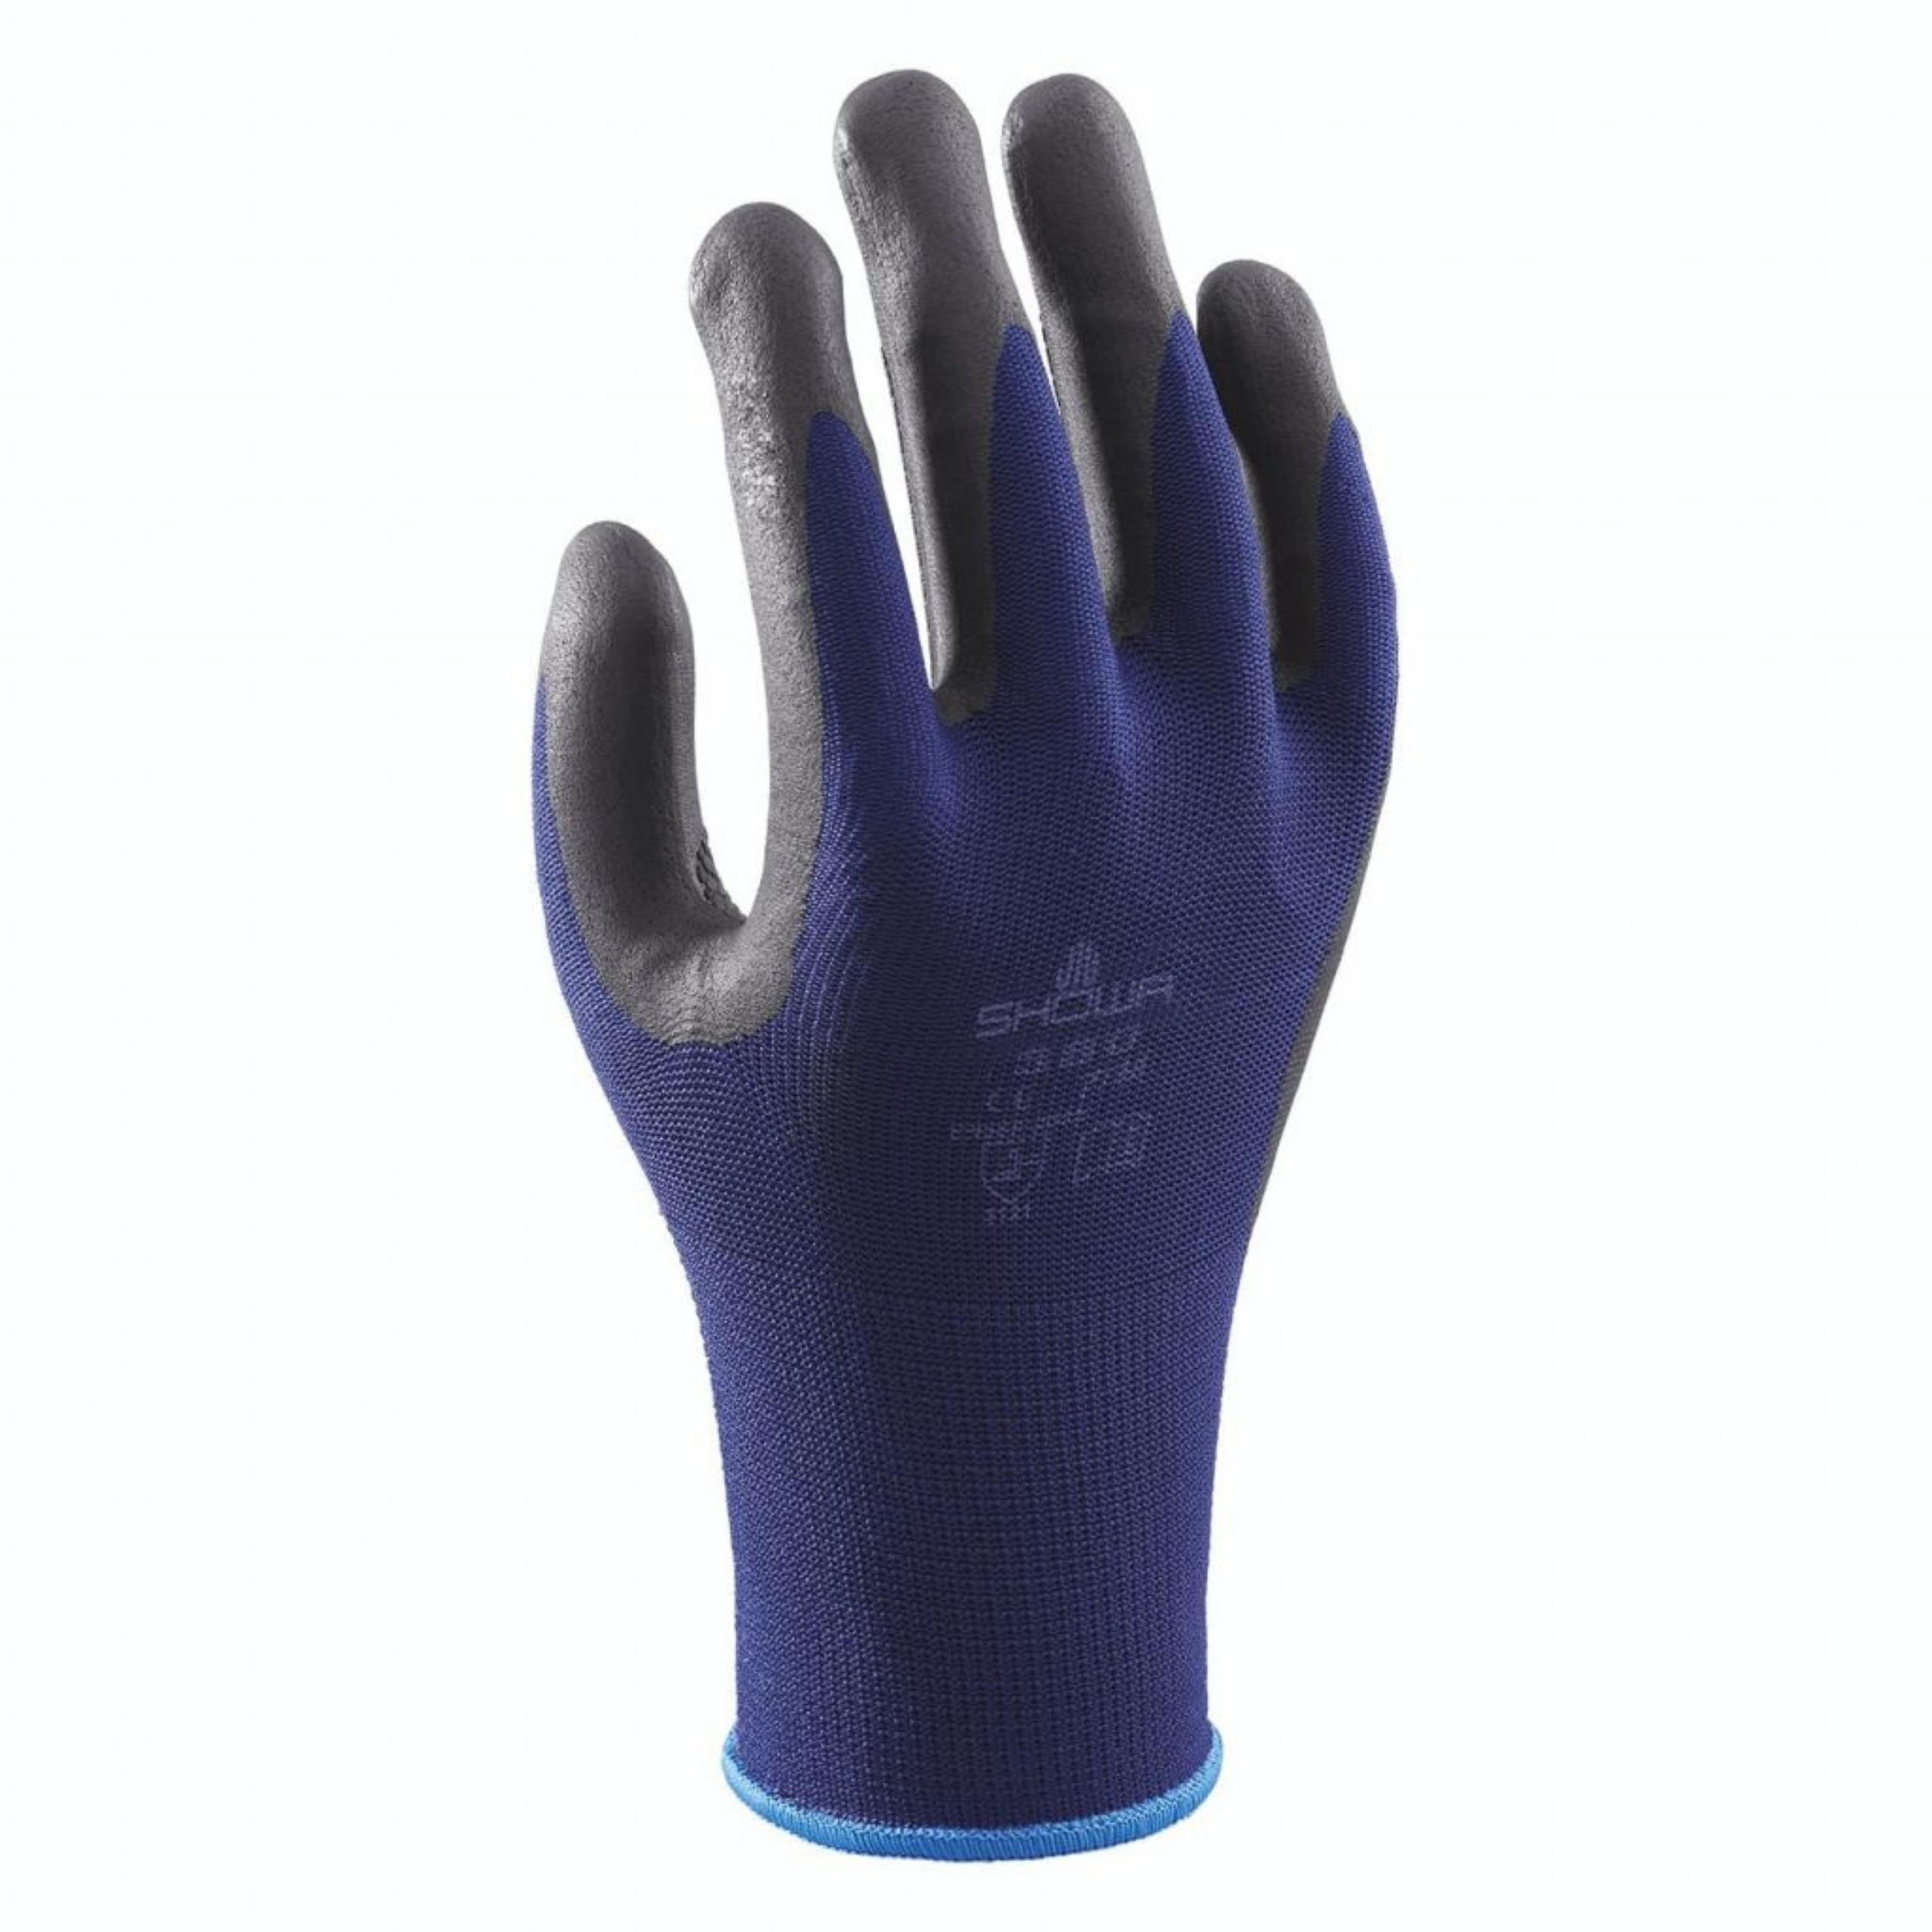 SHOWA 380 : General-purpose Gloves 3 Pack